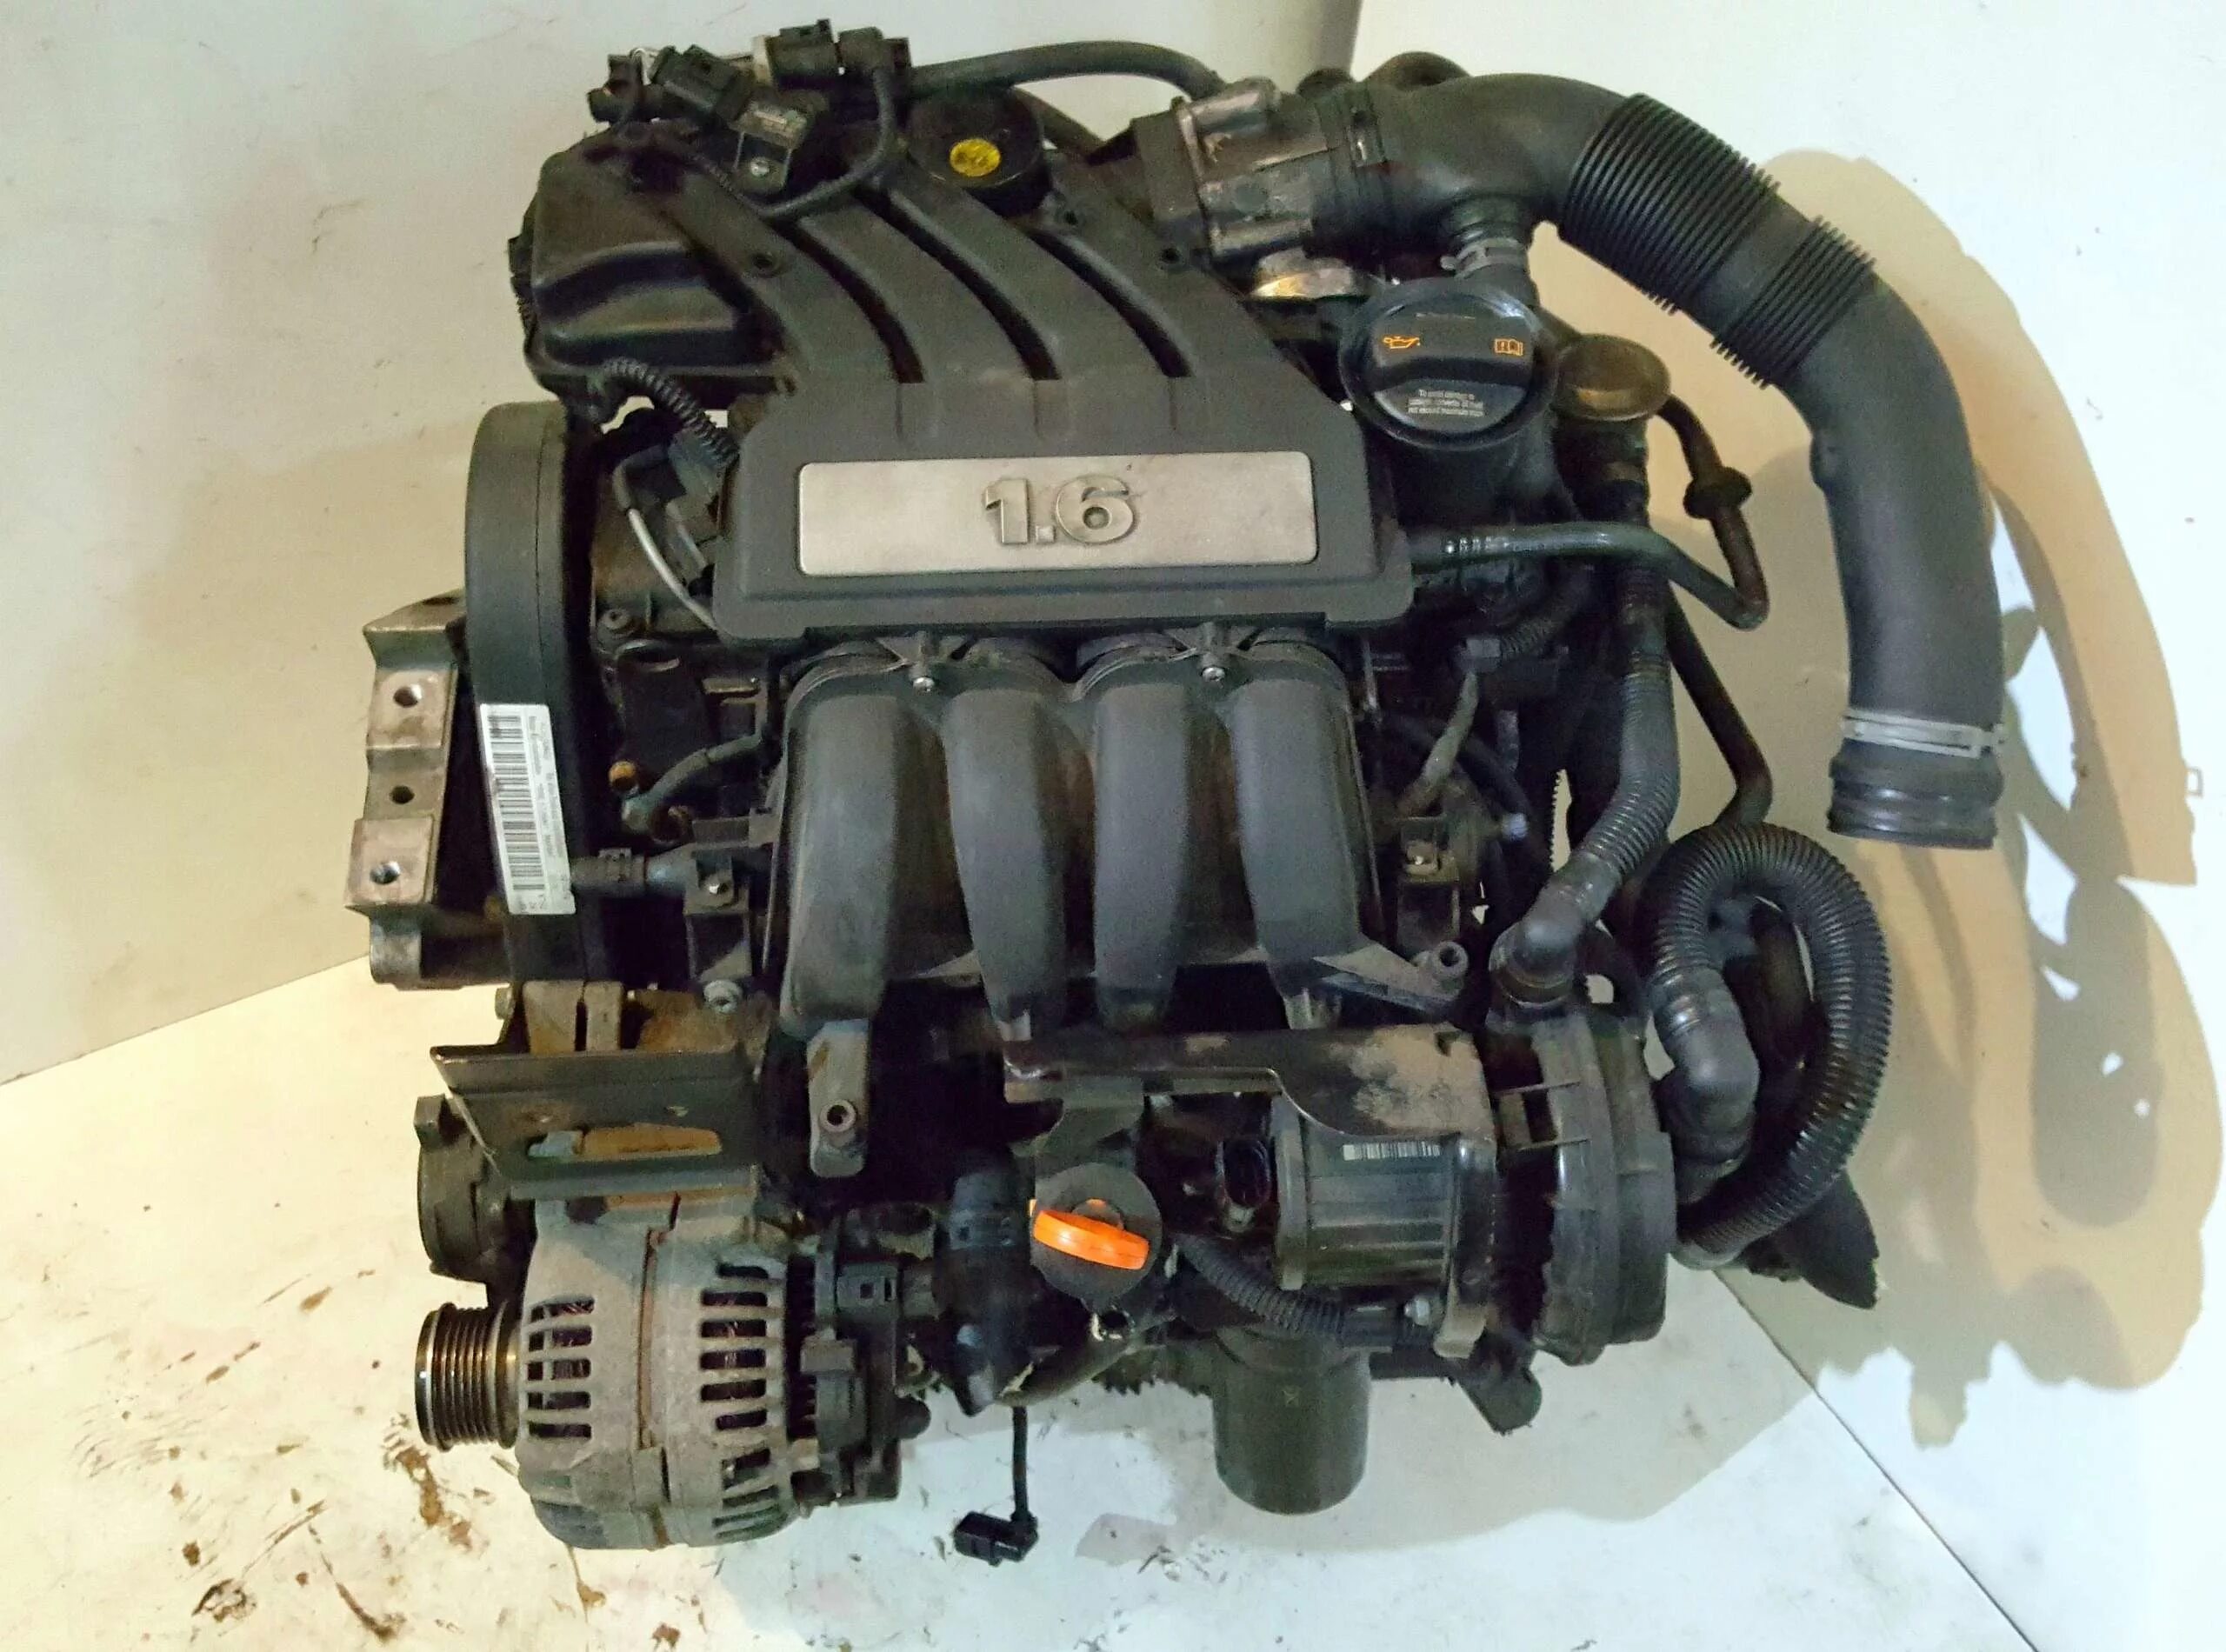 Octavia a5 bse. VW Golf 6 1.6 BSE мотор. Мотор BSE 1.6 Фольксваген. Мотор VW Golf BSE 1.6. BSE 1.6 Octavia a5.